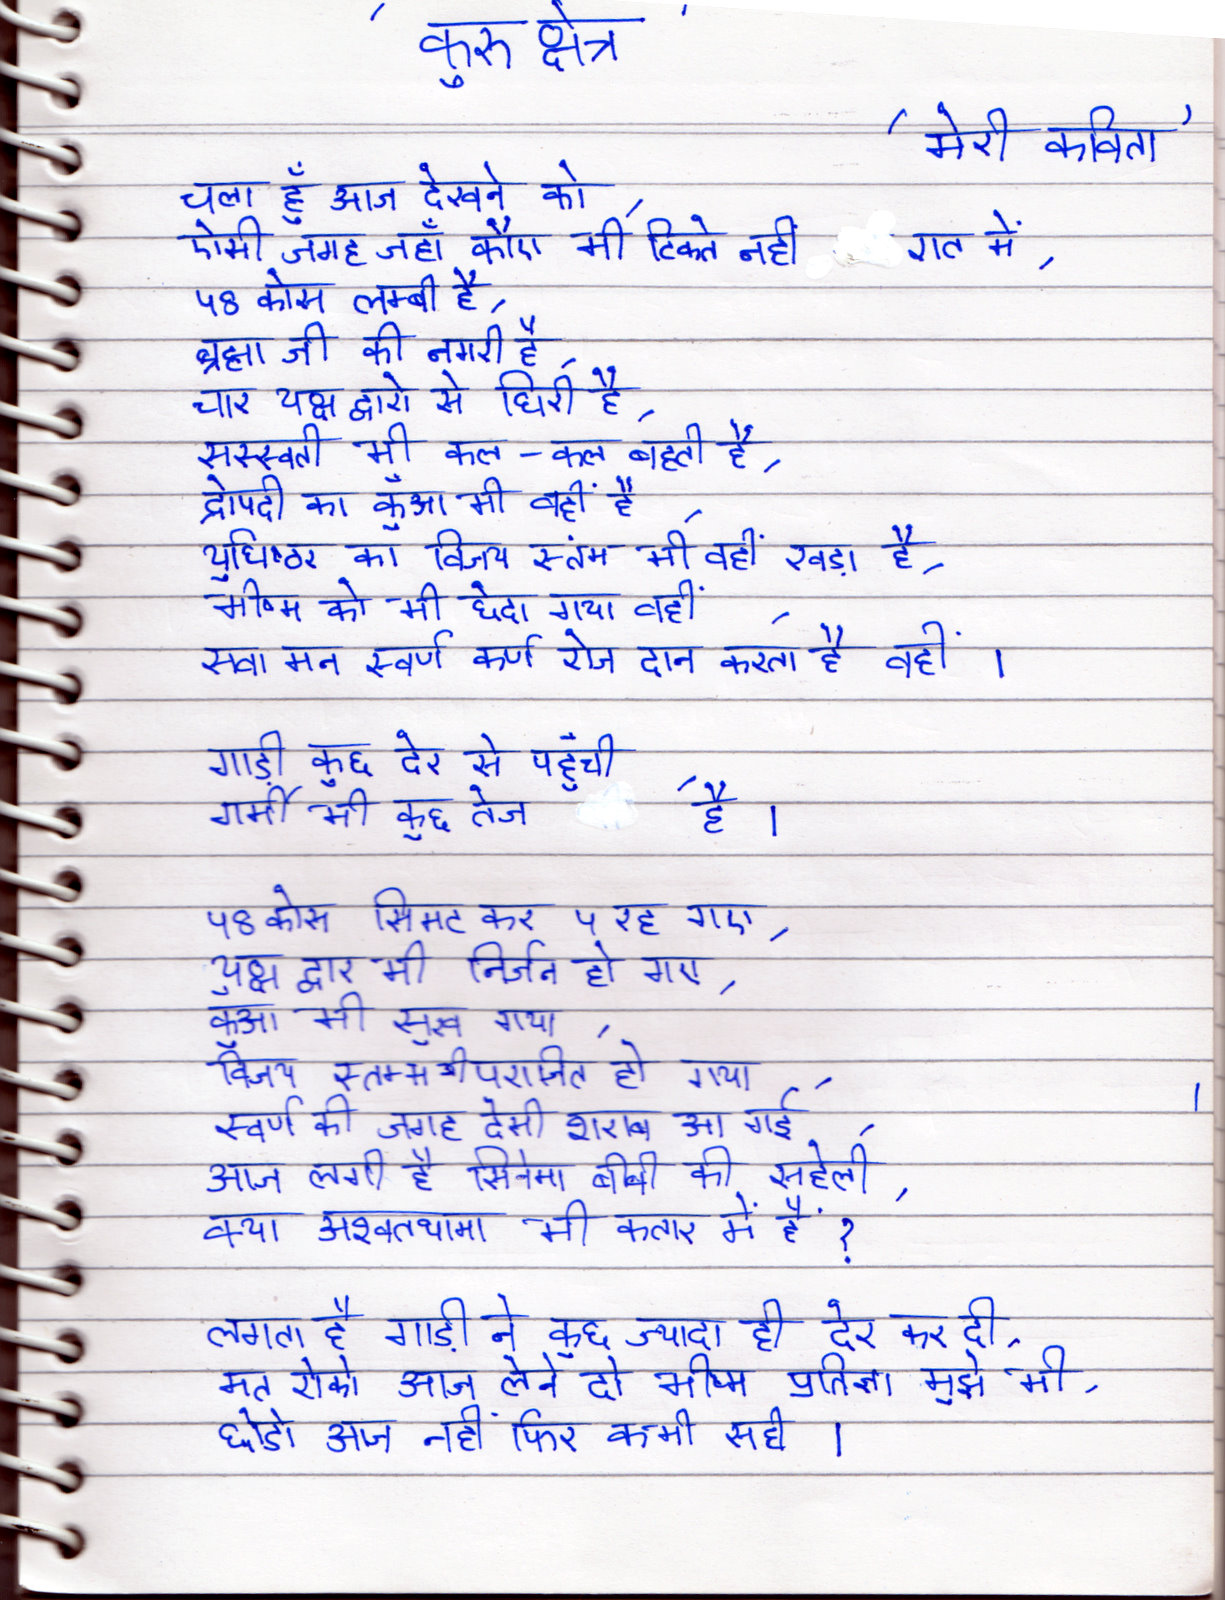 My life essay in hindi